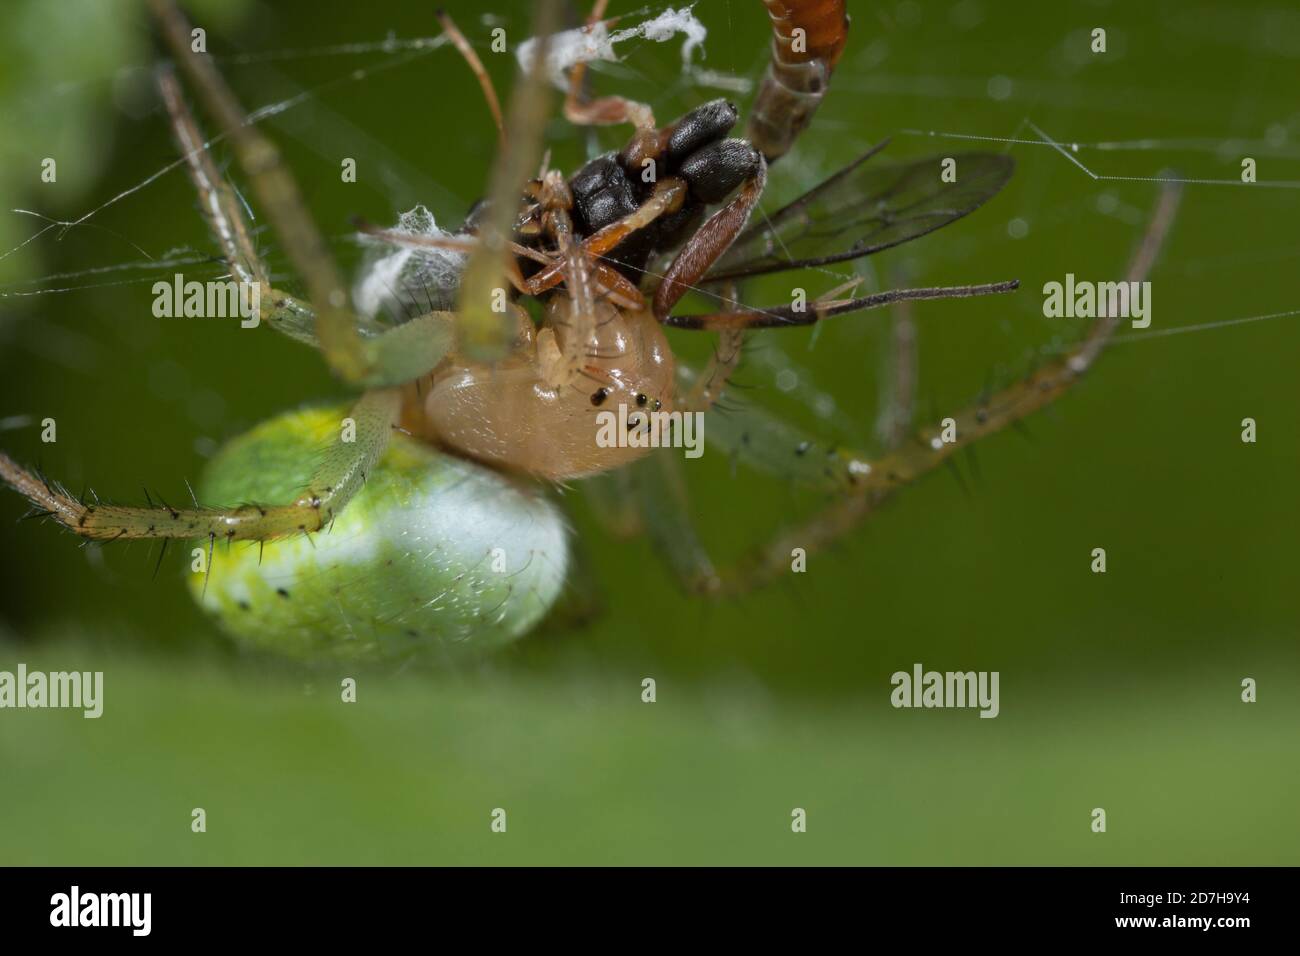 Araña de calabaza, araña de calabaza (Araniella cucurbitina, Araneus cucurbitinus), envuelve presa, Alemania Foto de stock